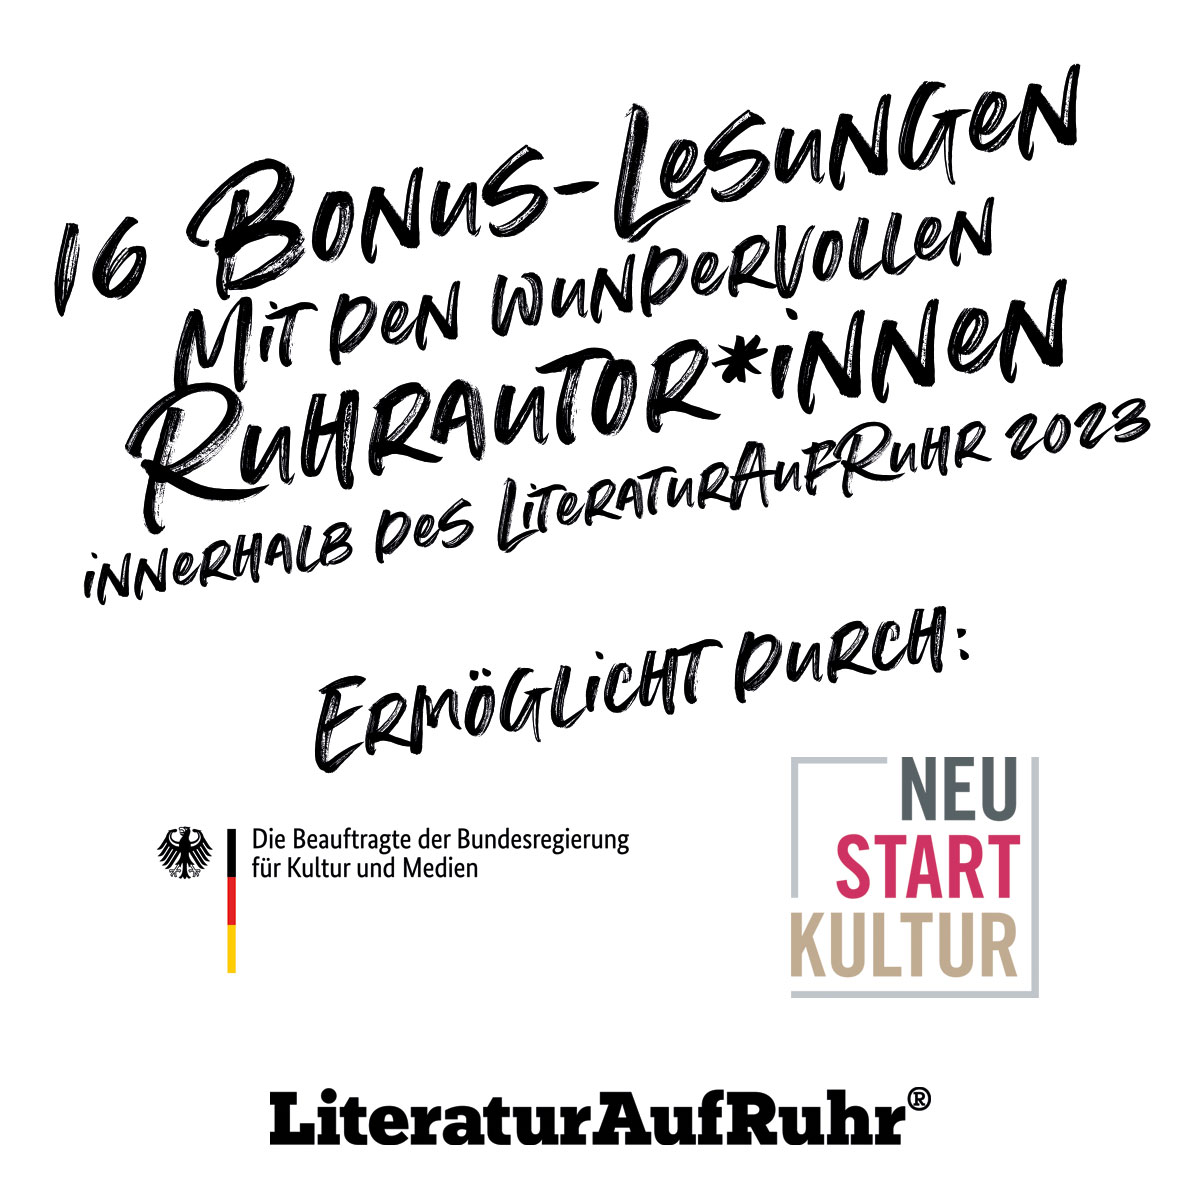 Featured image for “LiteraturAufRuhr®: 16 Bonus-Lesungen”